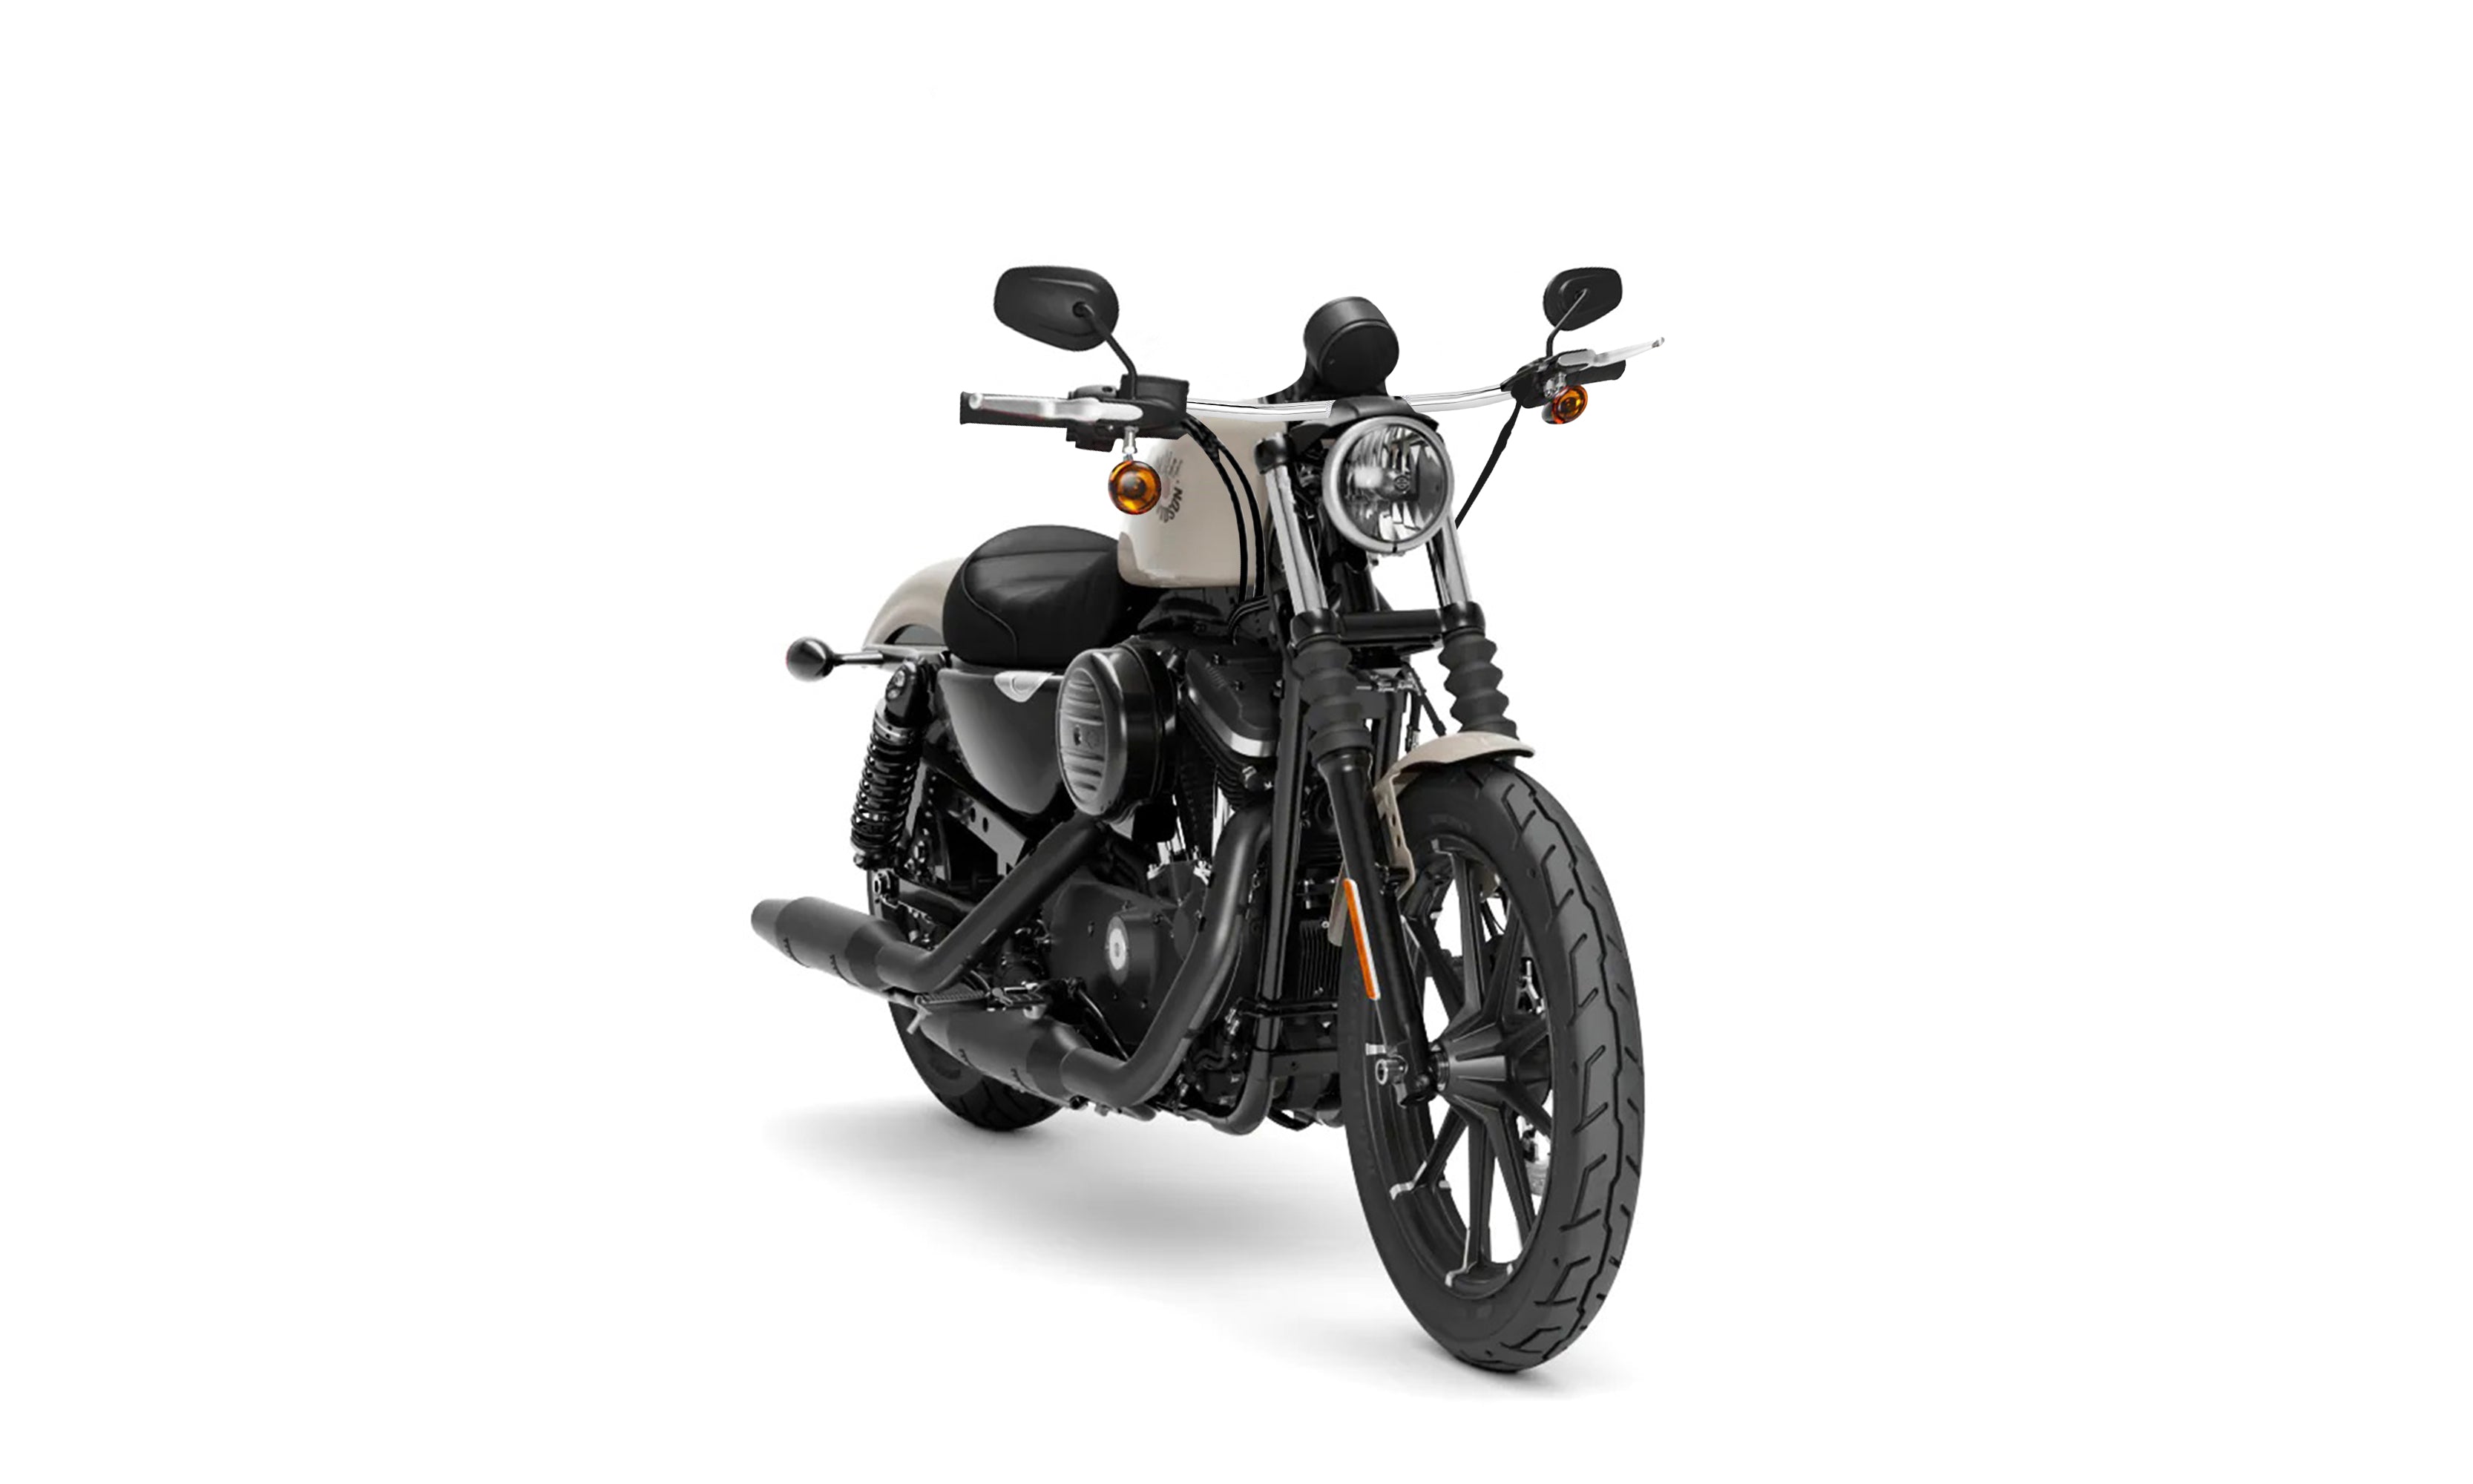 Viking Iron Born Drag Handlebar For Harley Sportster 883 Iron XL883N Chrome on Bikes @expand